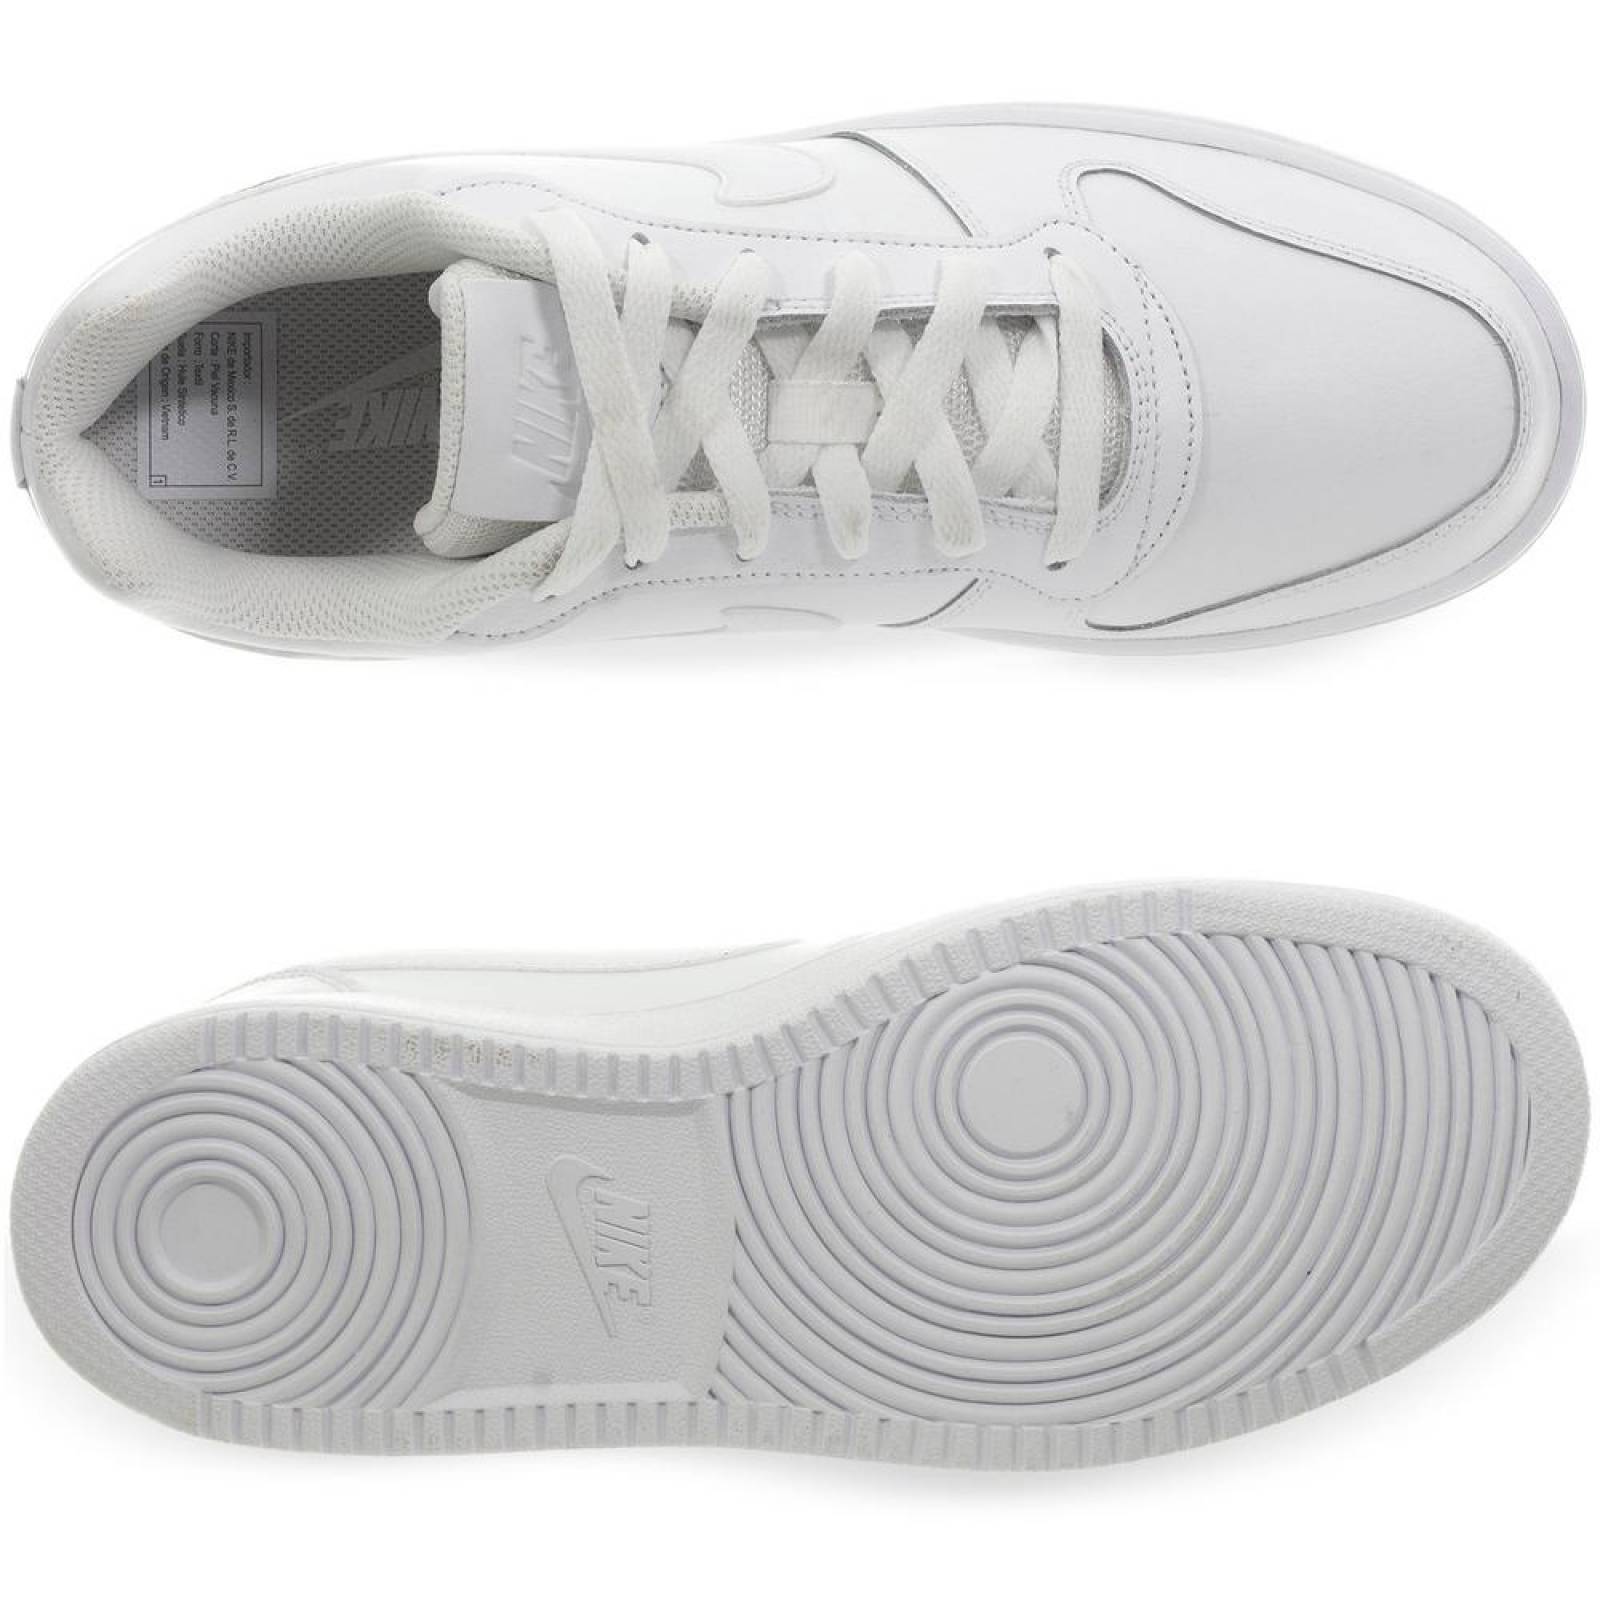 Tenis Nike Ebernon Low - AQ1775100 - Blanco - Hombre 